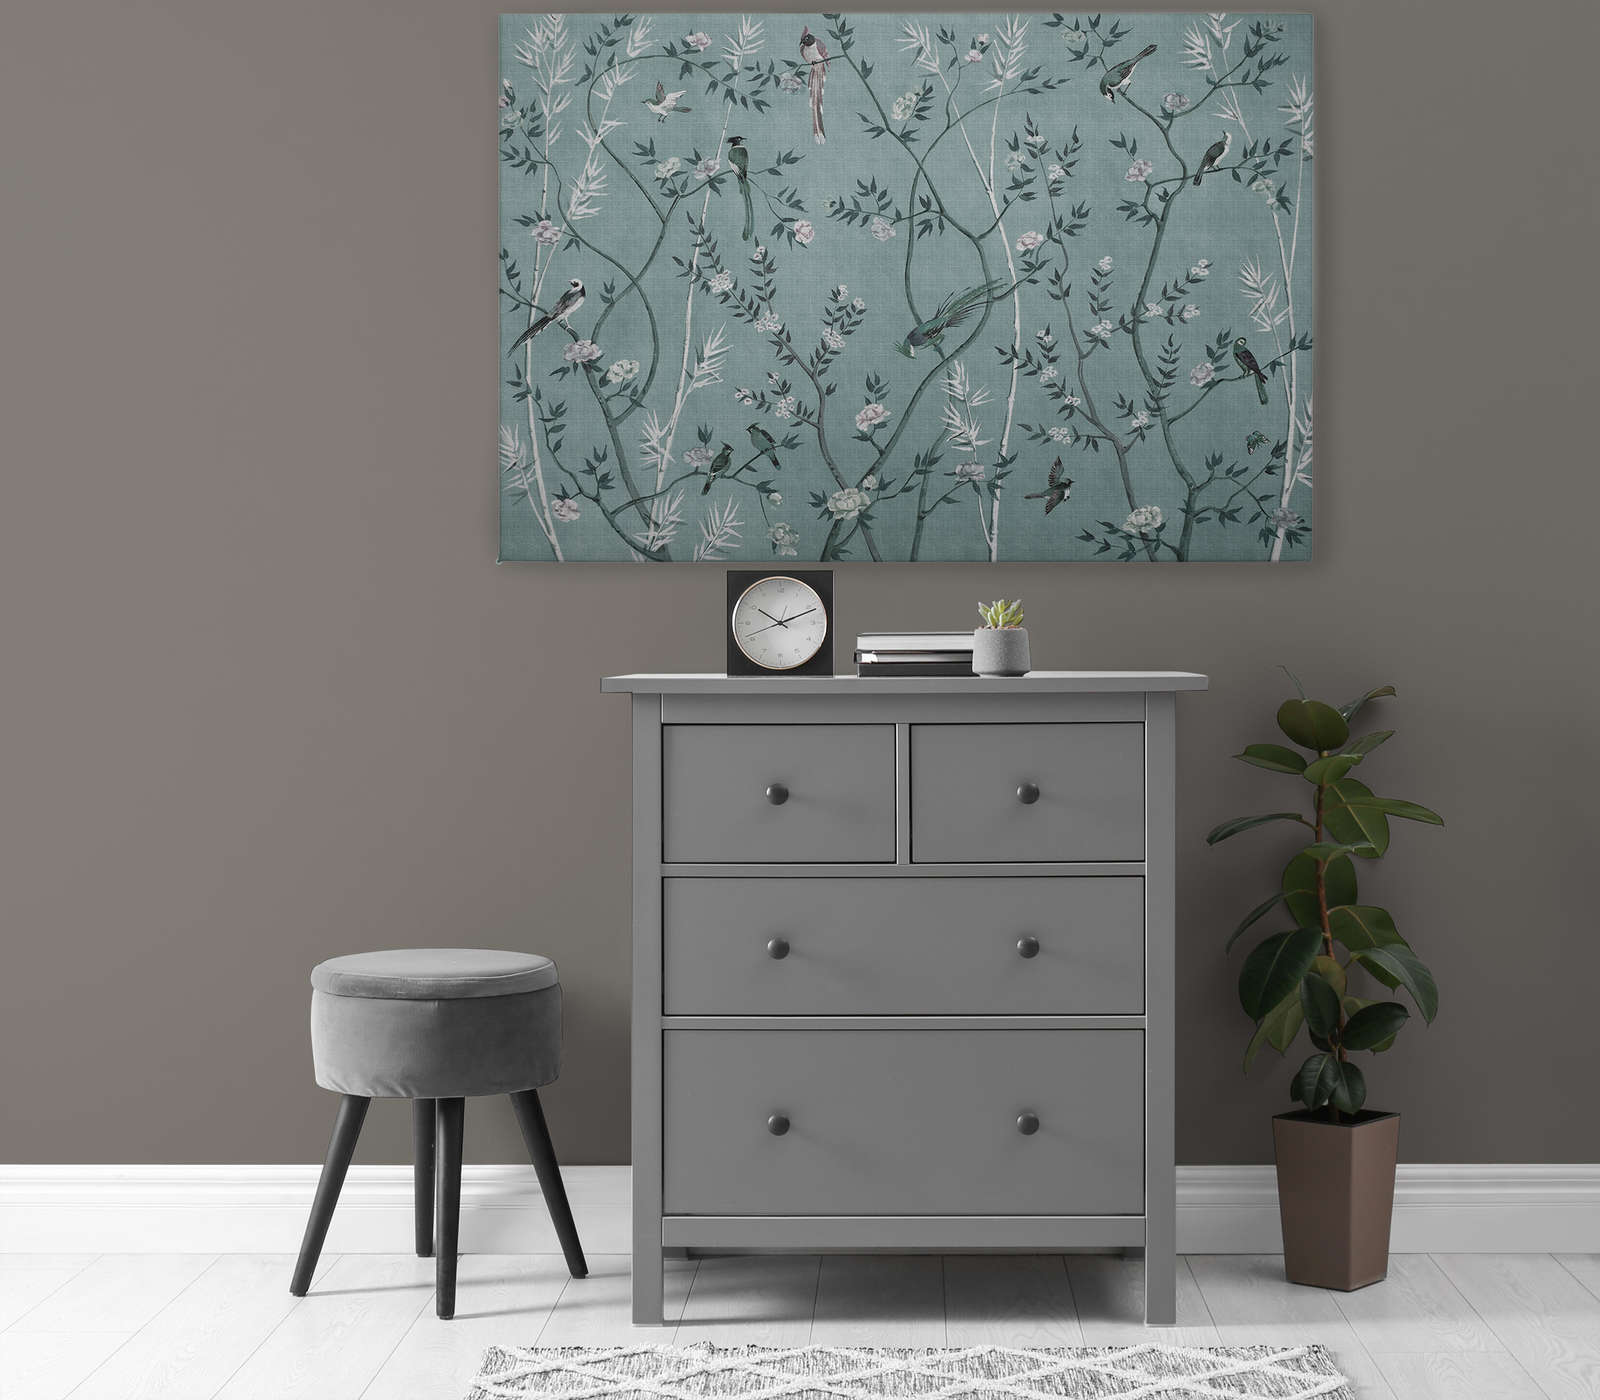             Tea Room 1 - Quadro su tela Birds & Blossoms Design in Petrol & White - 1,20 m x 0,80 m
        